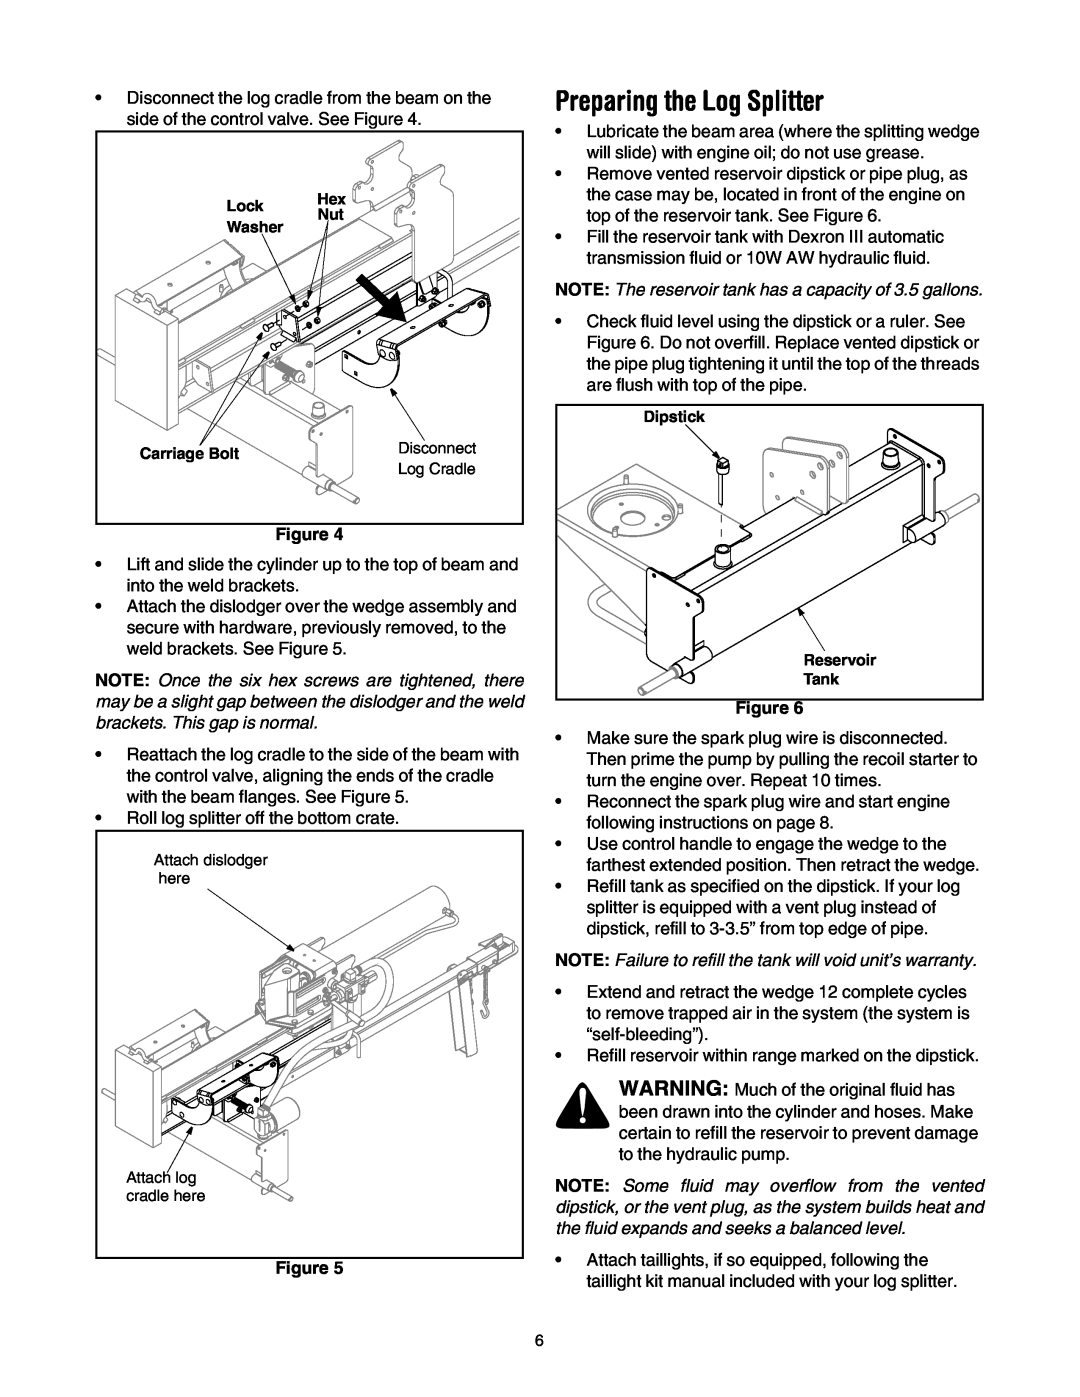 MTD 500, 510 manual Preparing the Log Splitter 